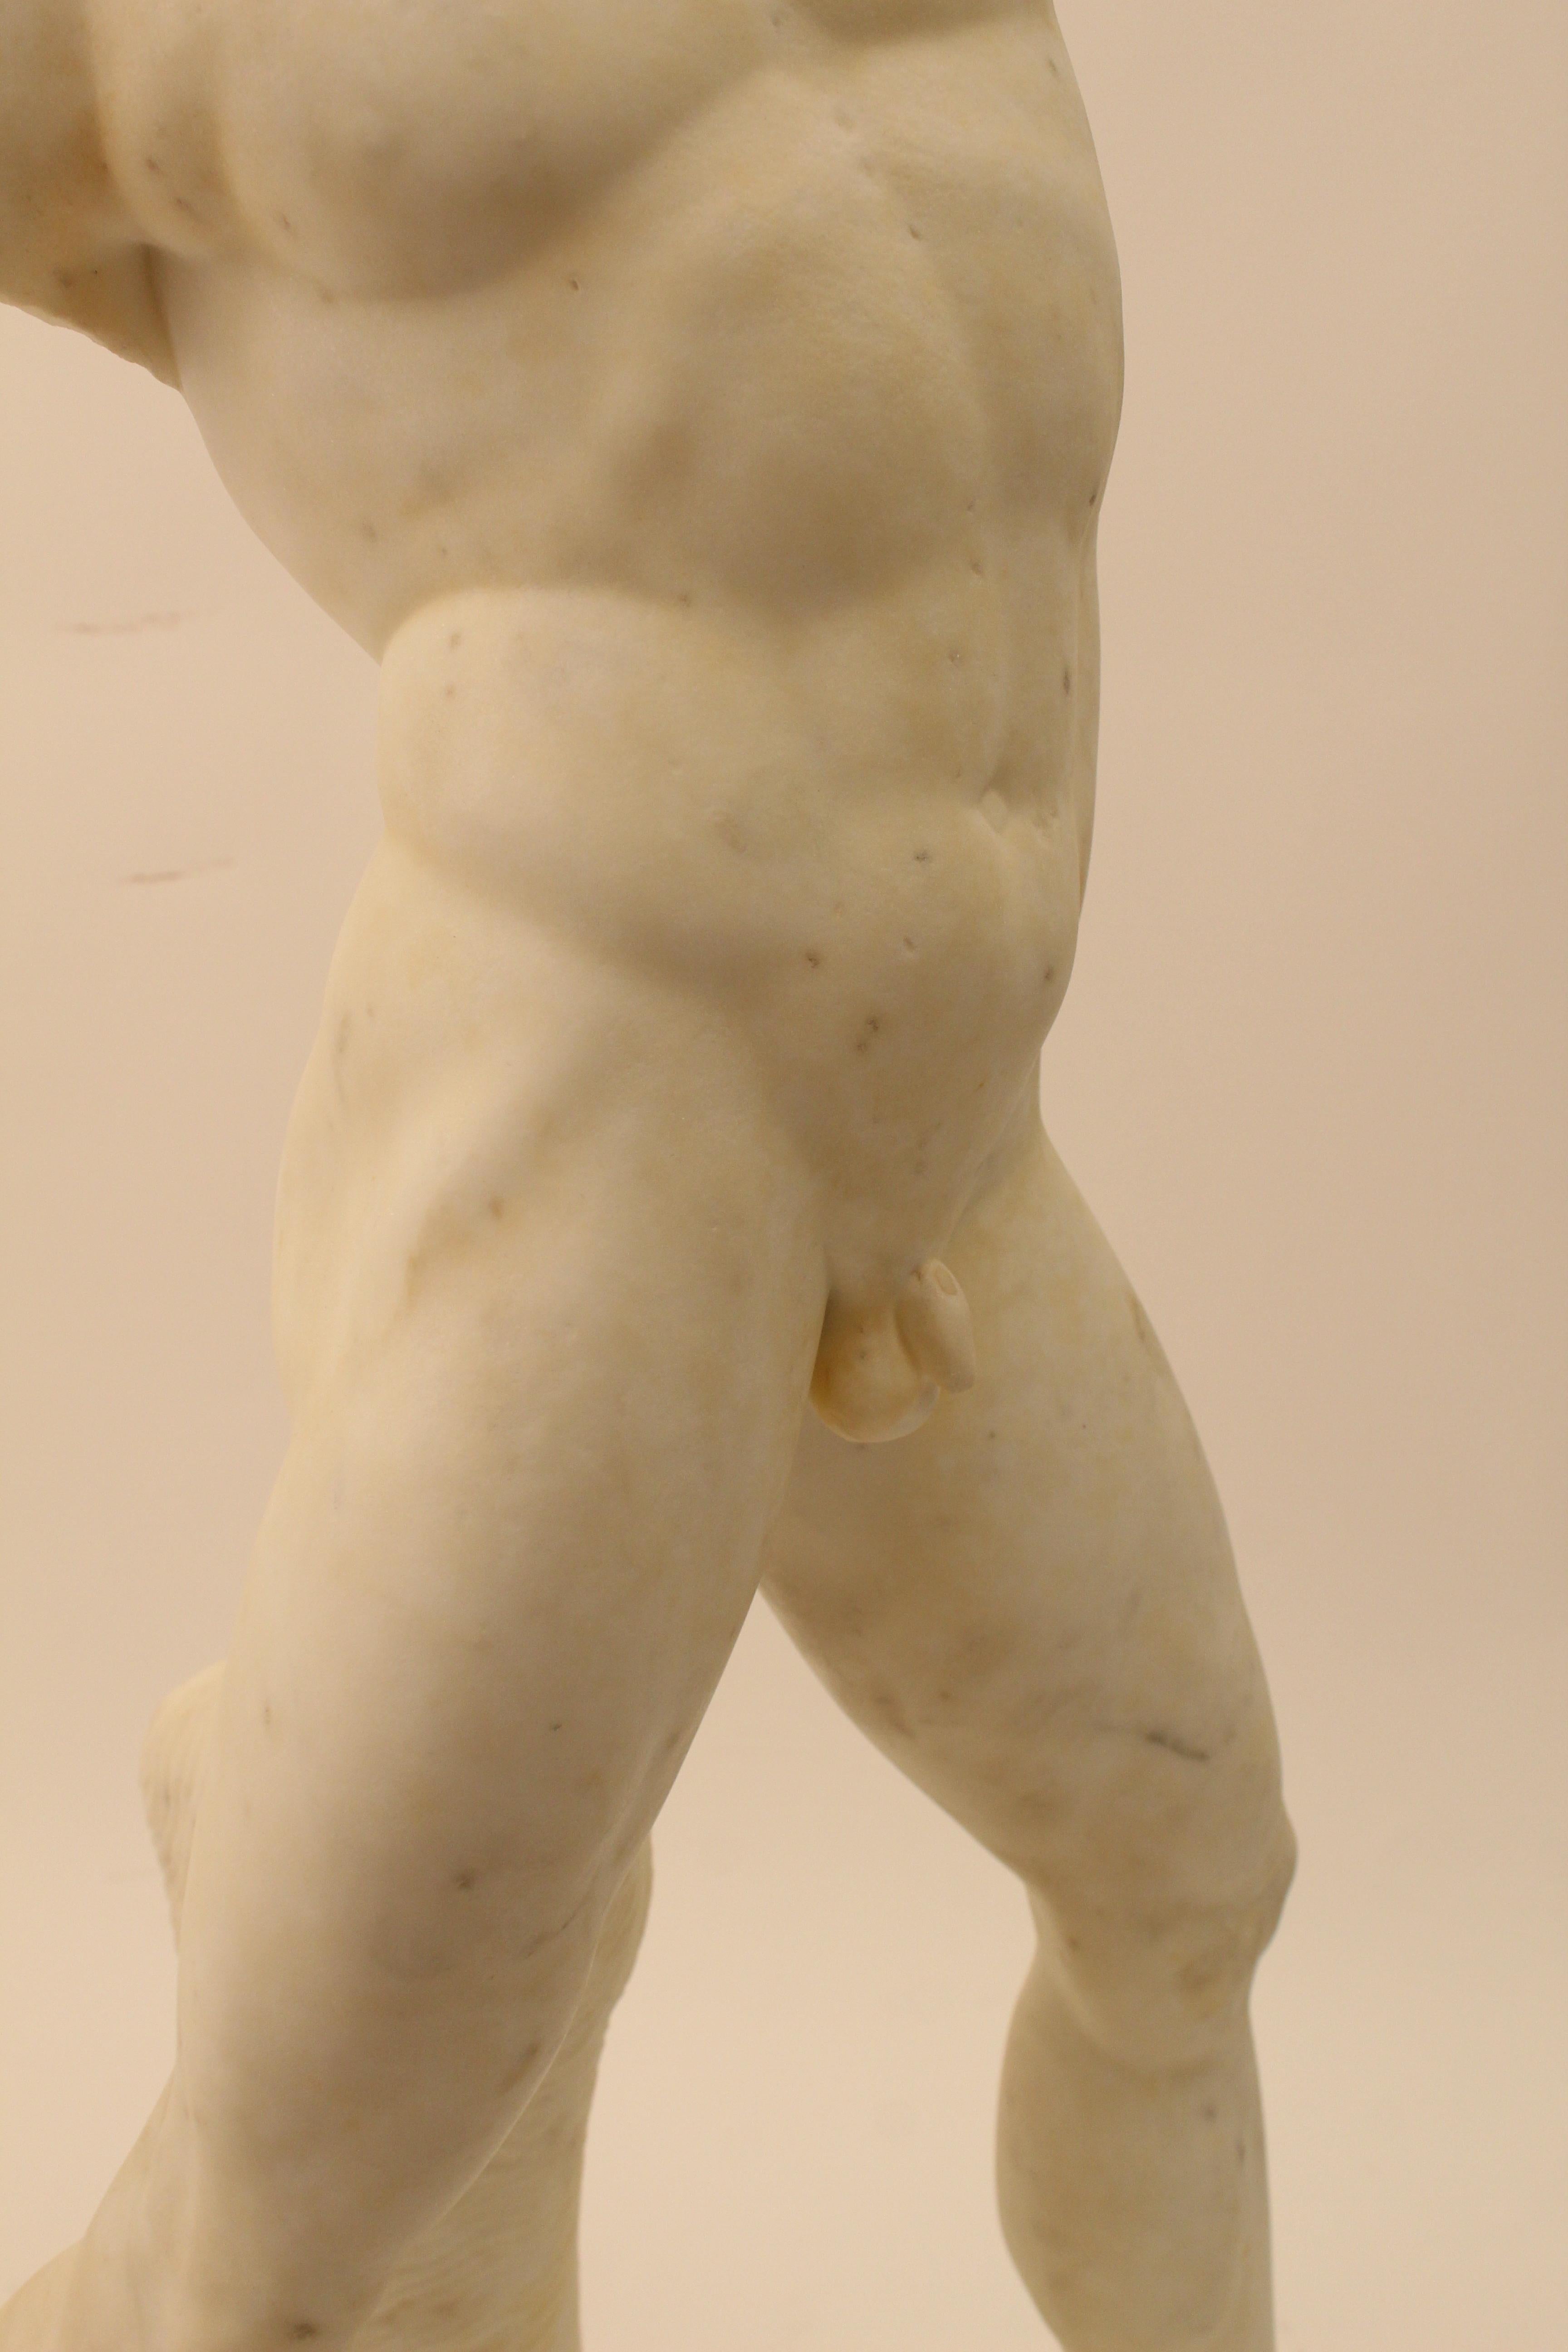 Pietro Franchi Signed White Marble Classical Statue, Italian, 19th Century 2